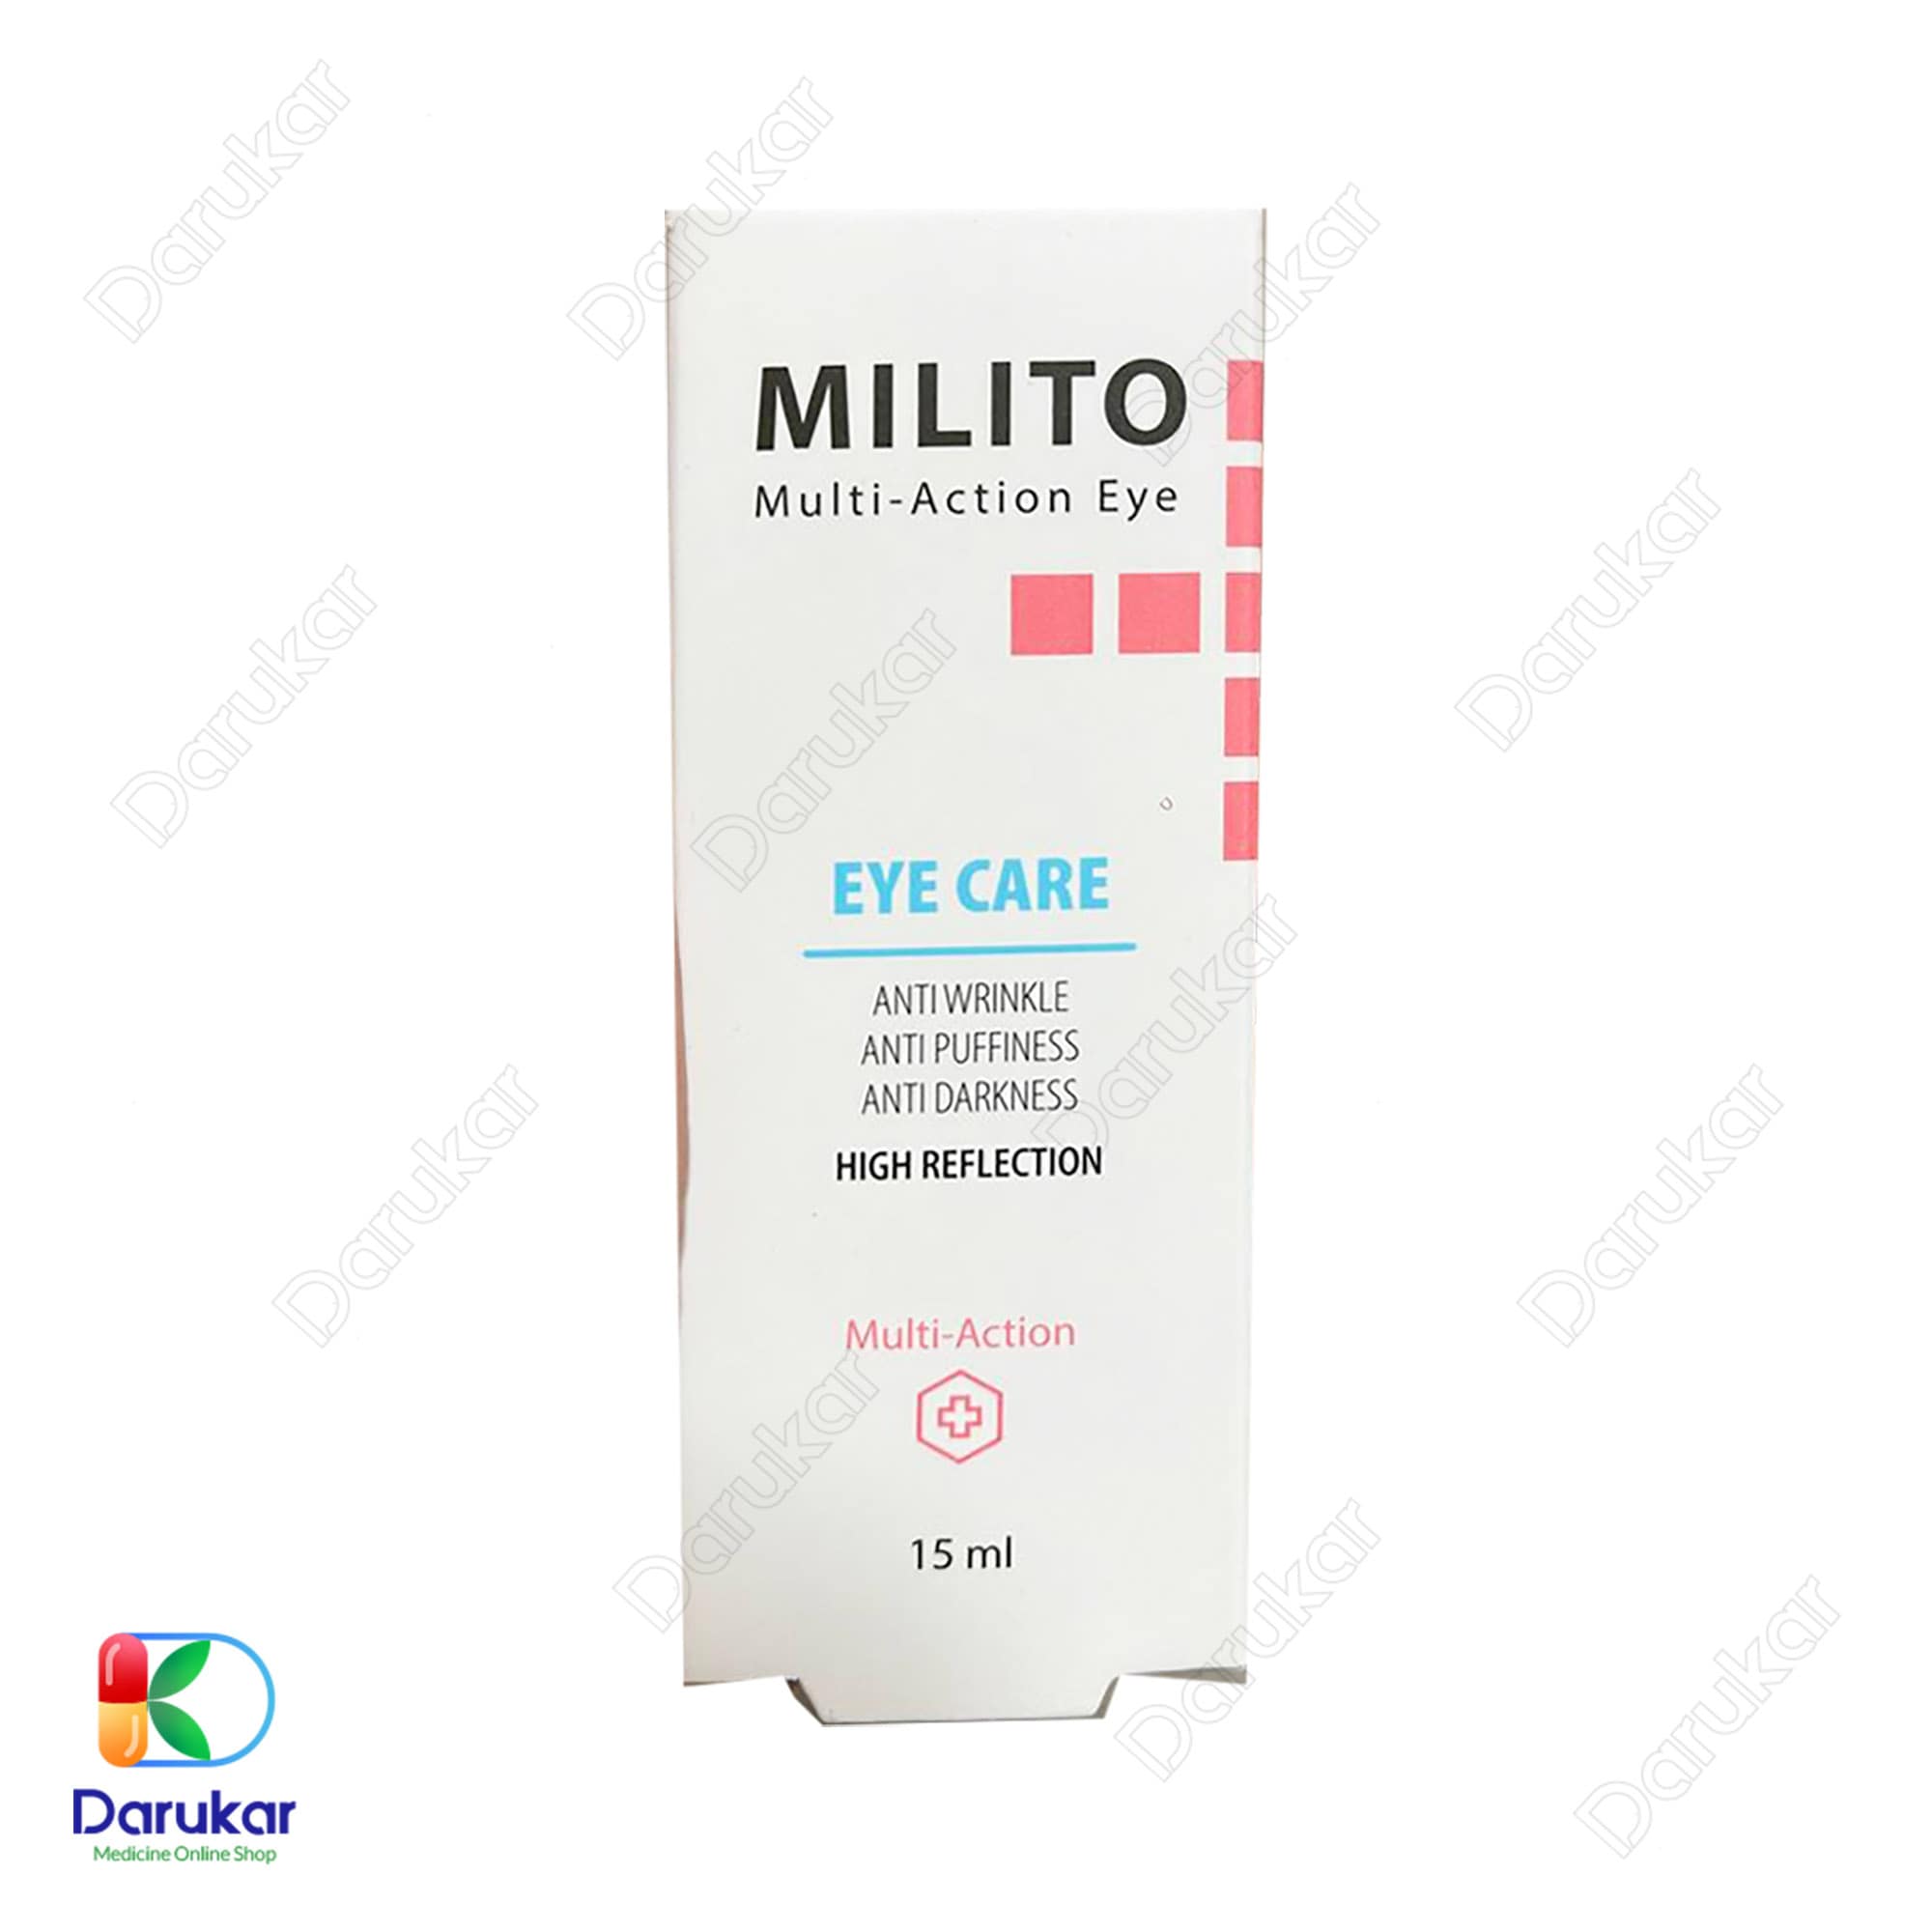 Milito Multi Action Eye Care Cream 15 ml 3